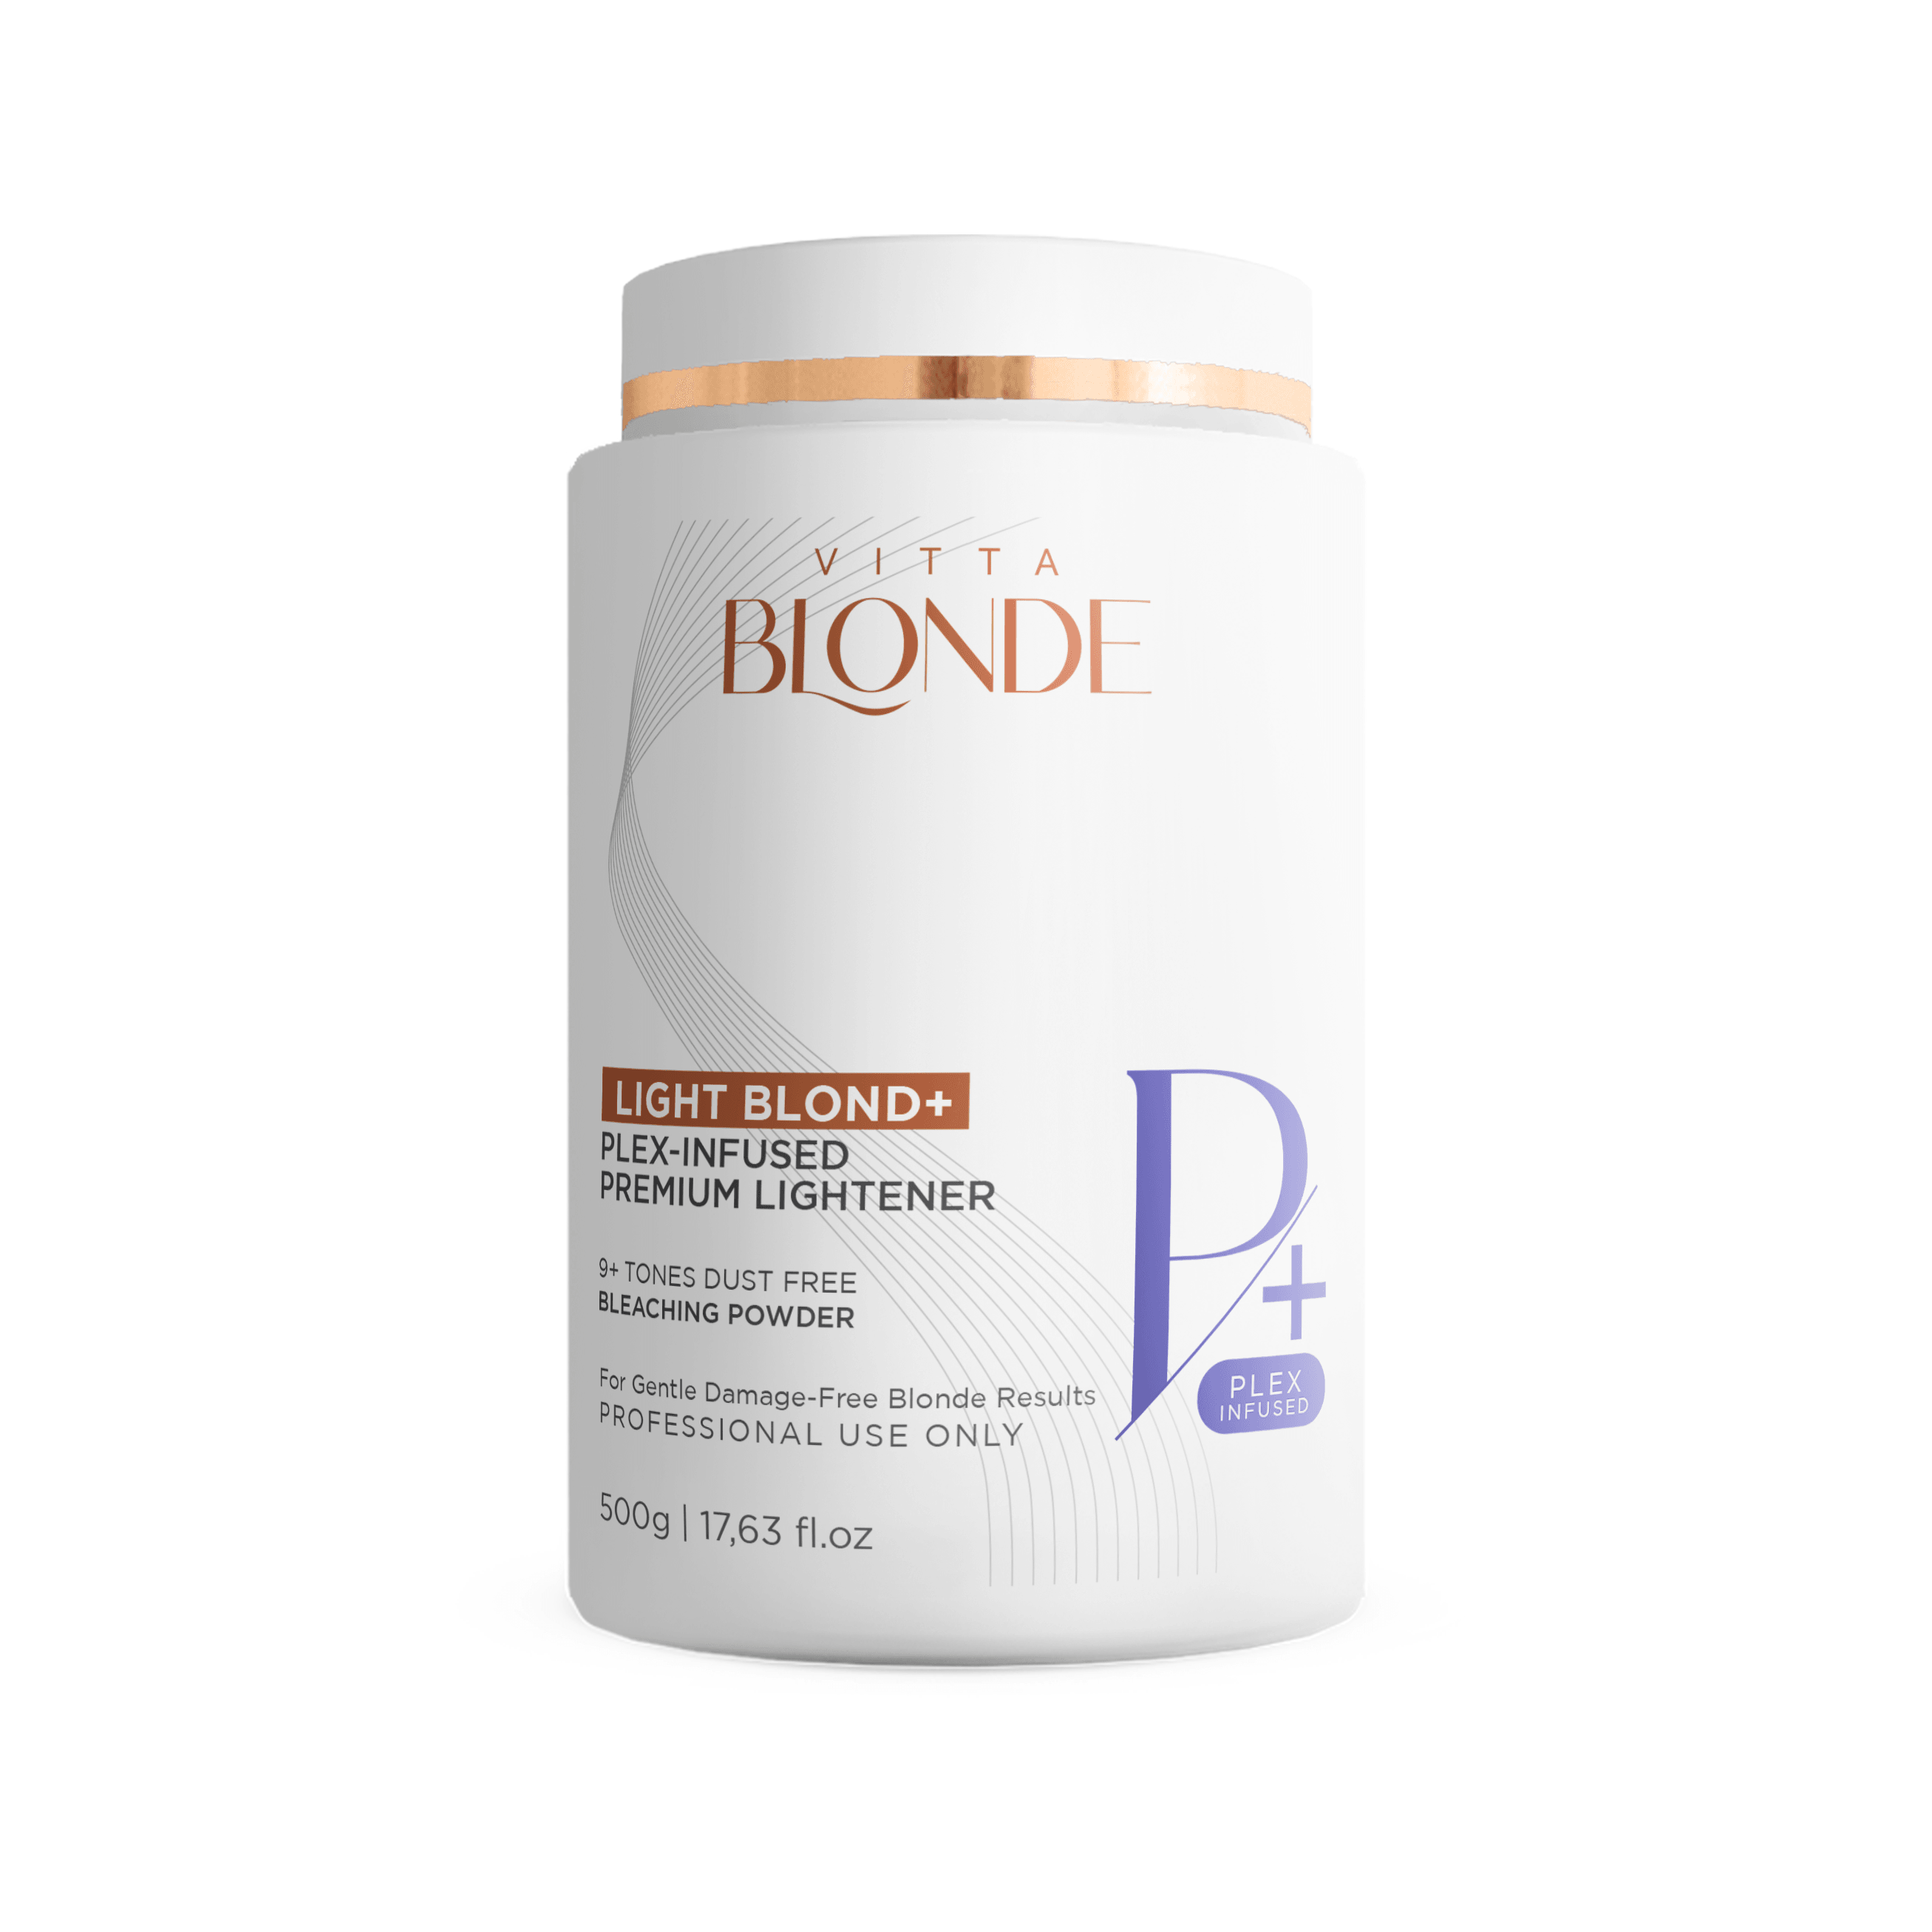 Vitta Blonde™ Bleaching Powder Light Blonde + 500g (17.6 fl. oz) - Vitta Gold Cosmetics